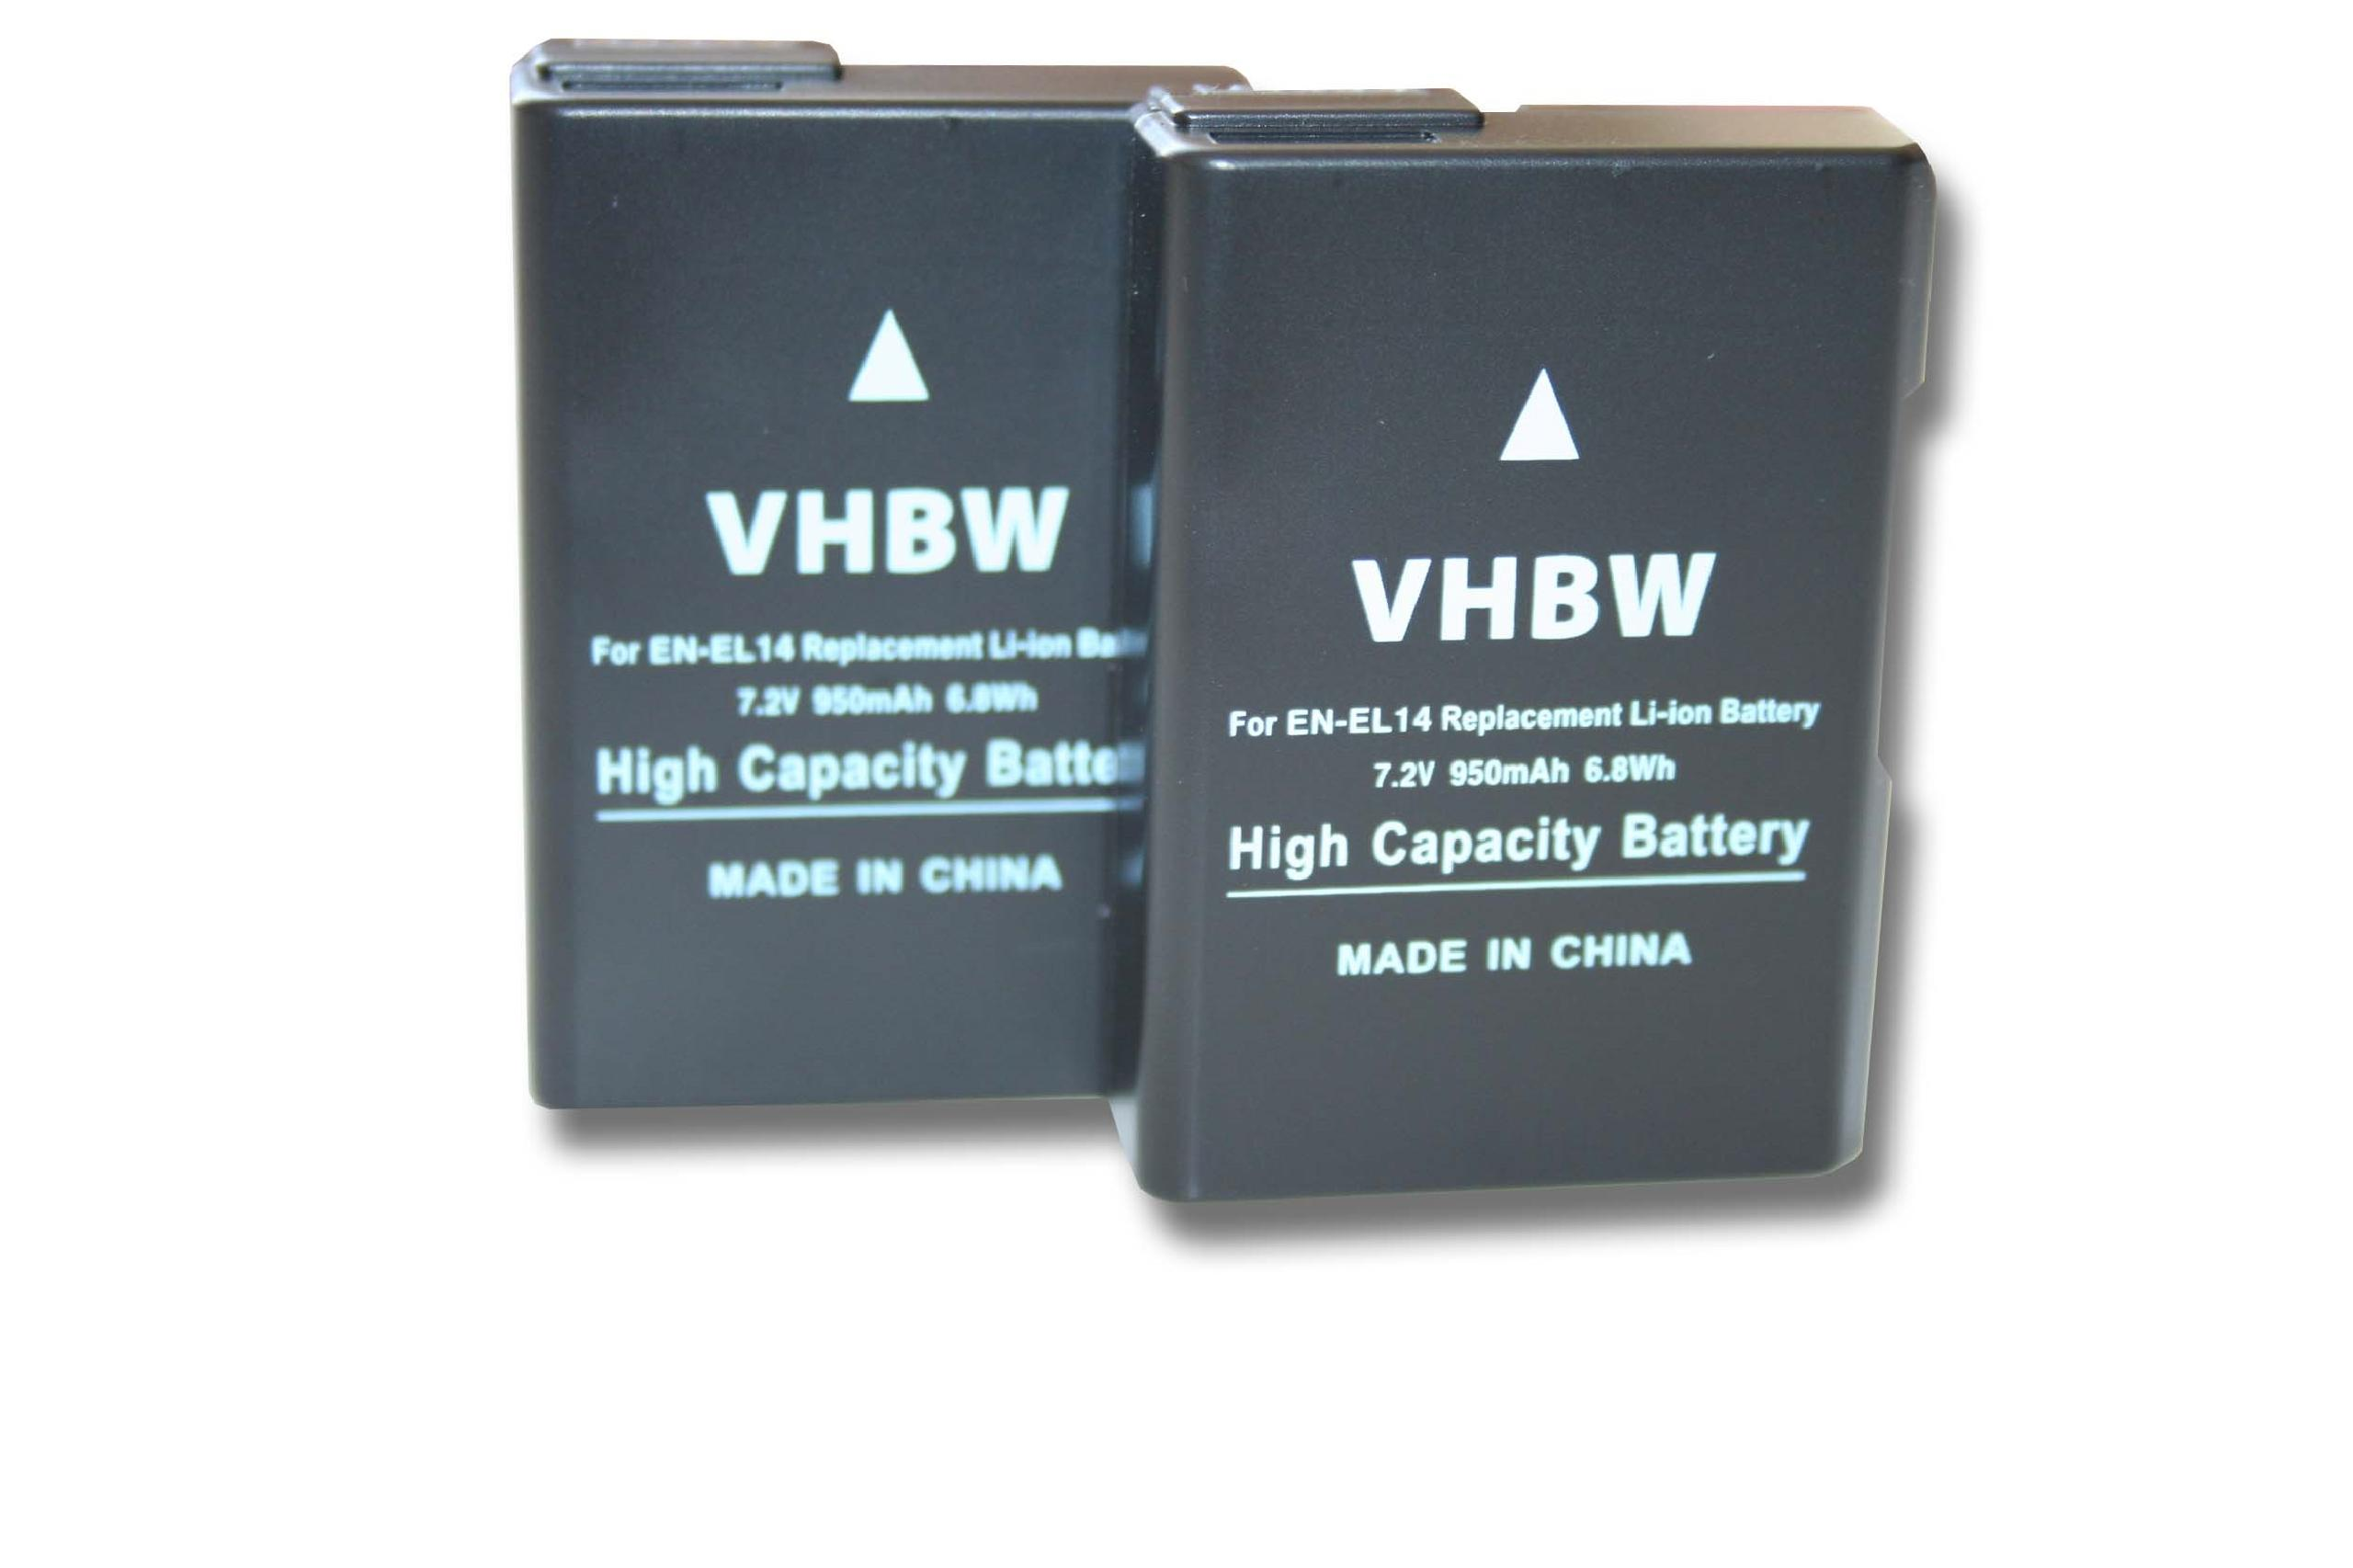 VHBW kompatibel mit P7000, Volt, P7700, Kamera, P7100, Coolpix - Nikon 950 Li-Ion Akku P7800 7.2